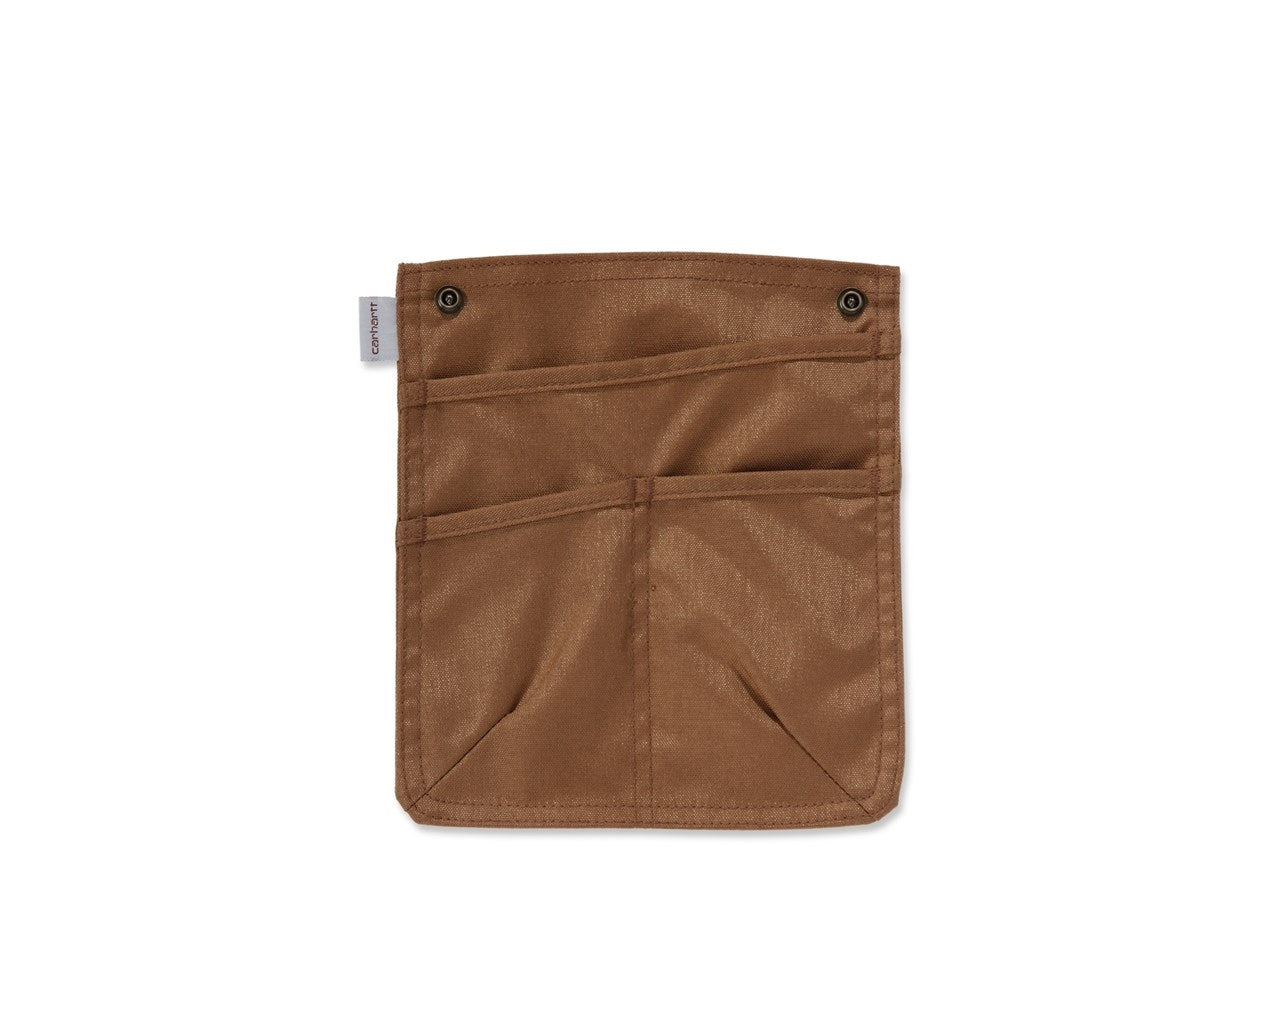 Carhartt Emea Detachable Pocket, Carhartt Brown, Size OFA